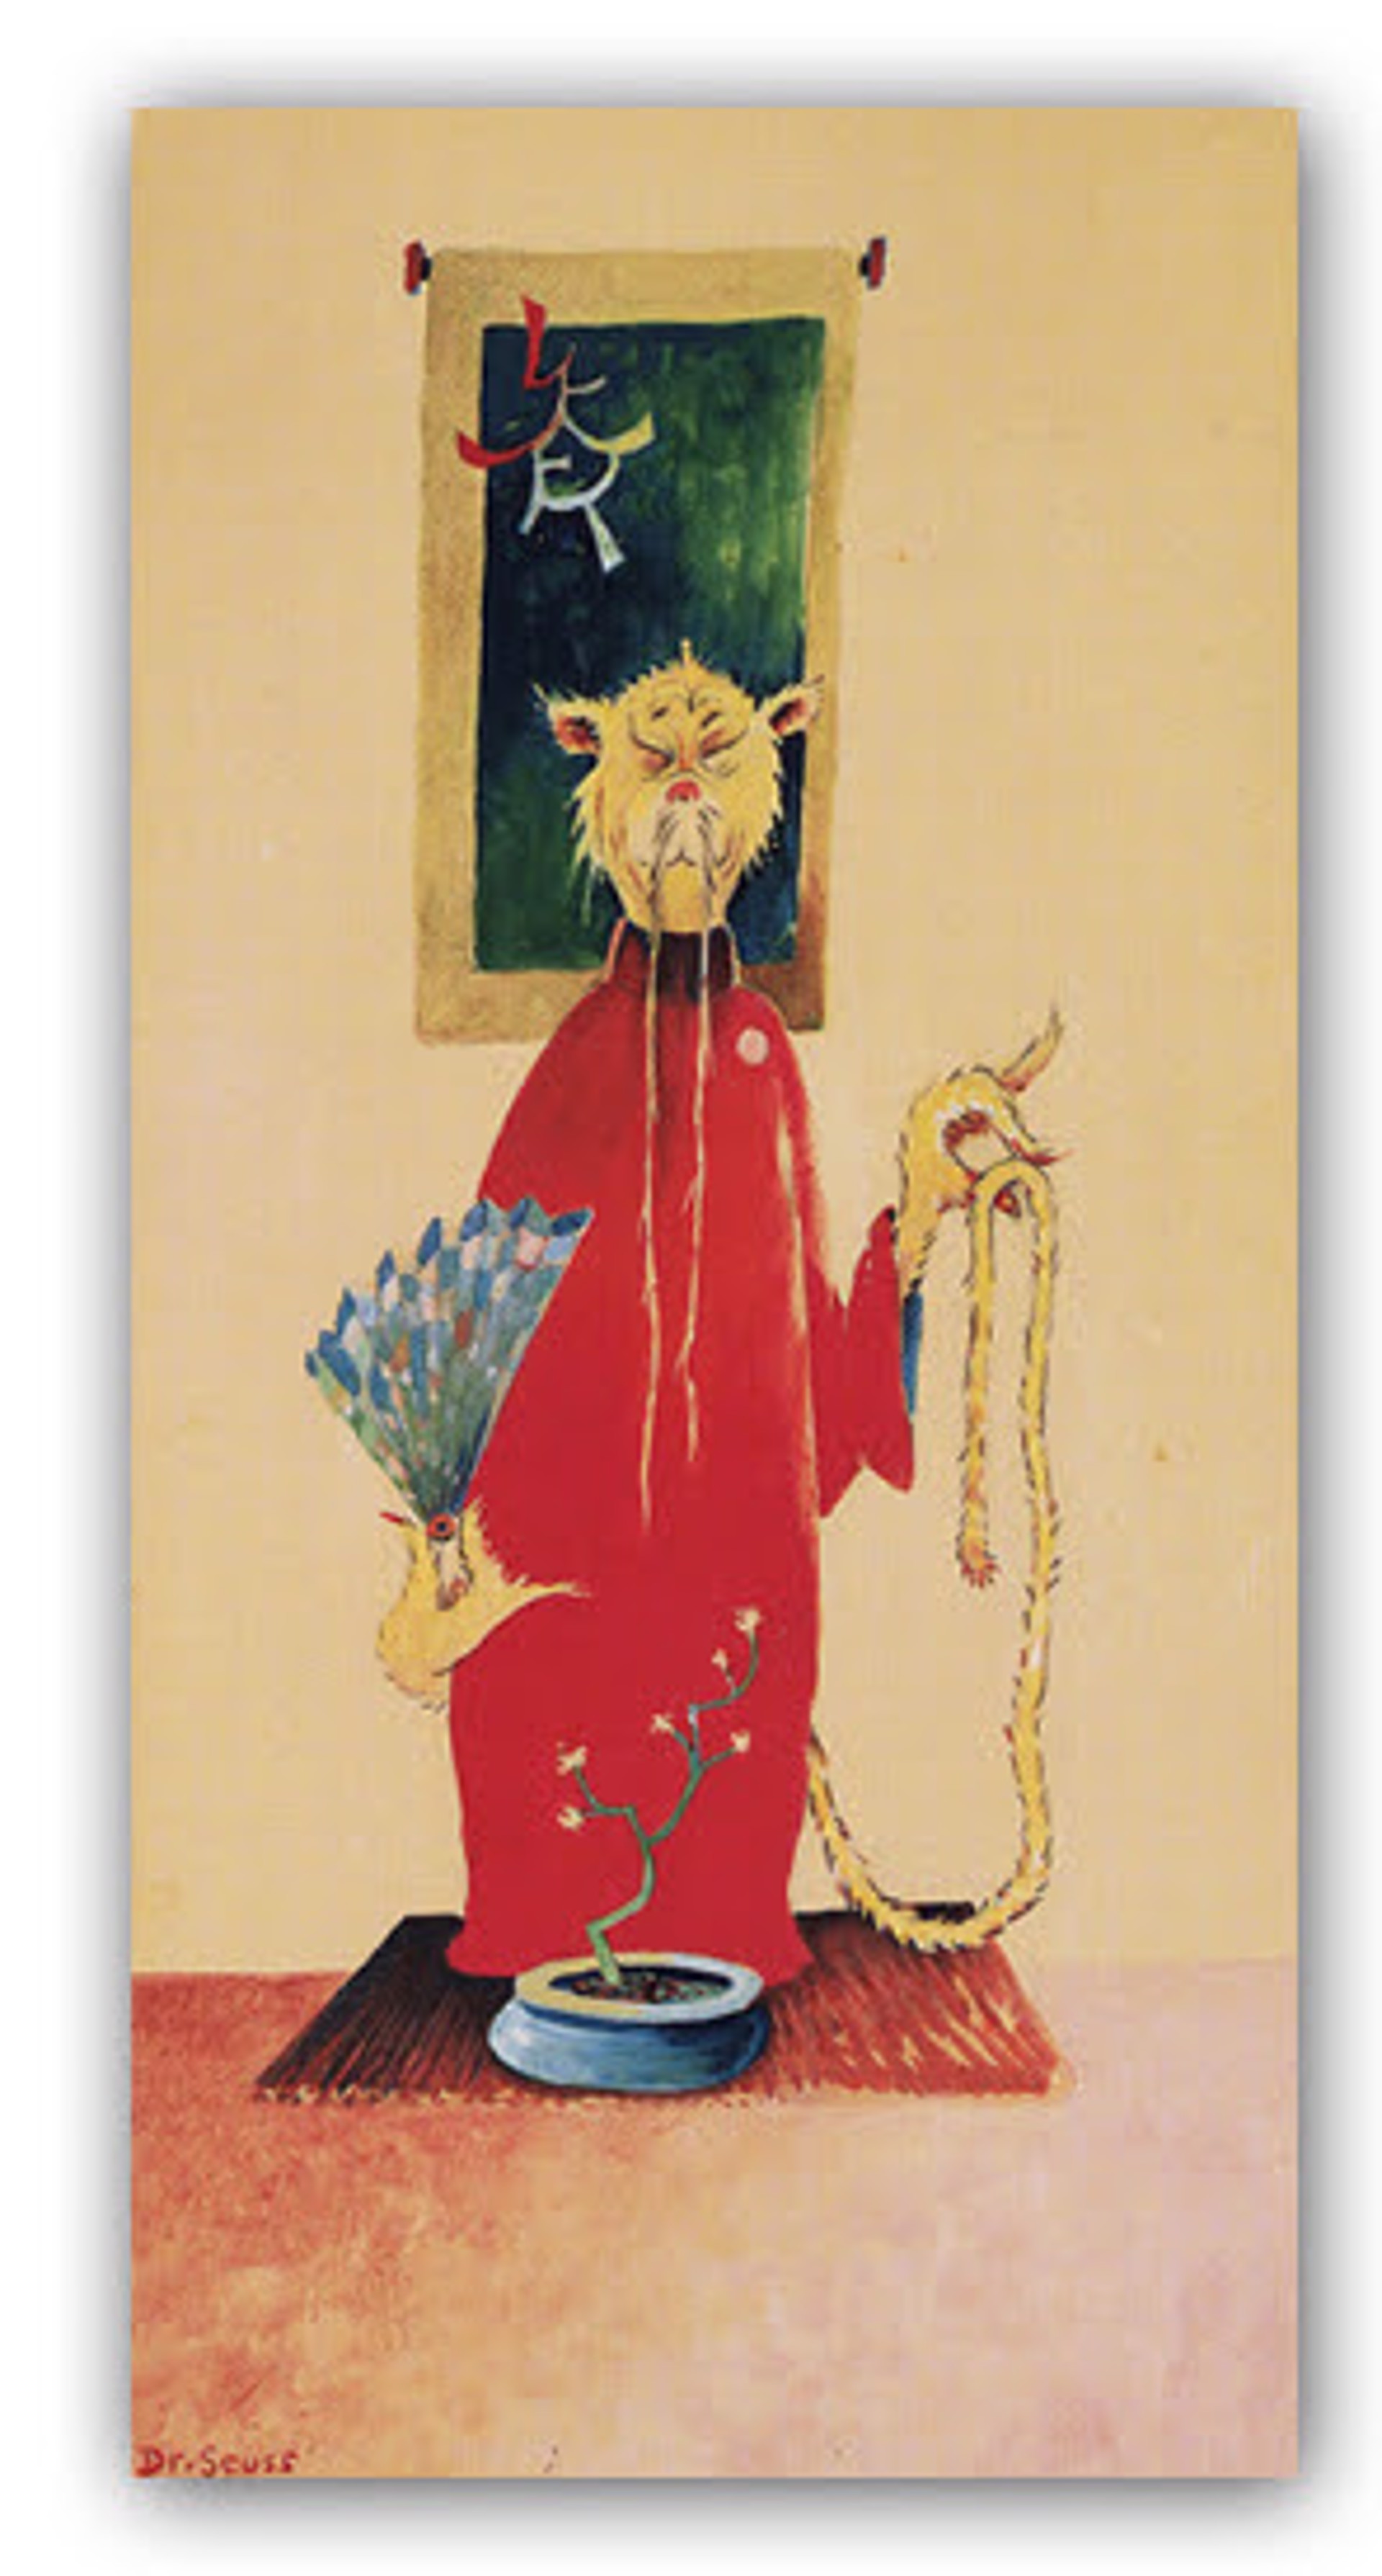 Wisdom of the Orient Cat NFS by Theodor Seuss Geisel